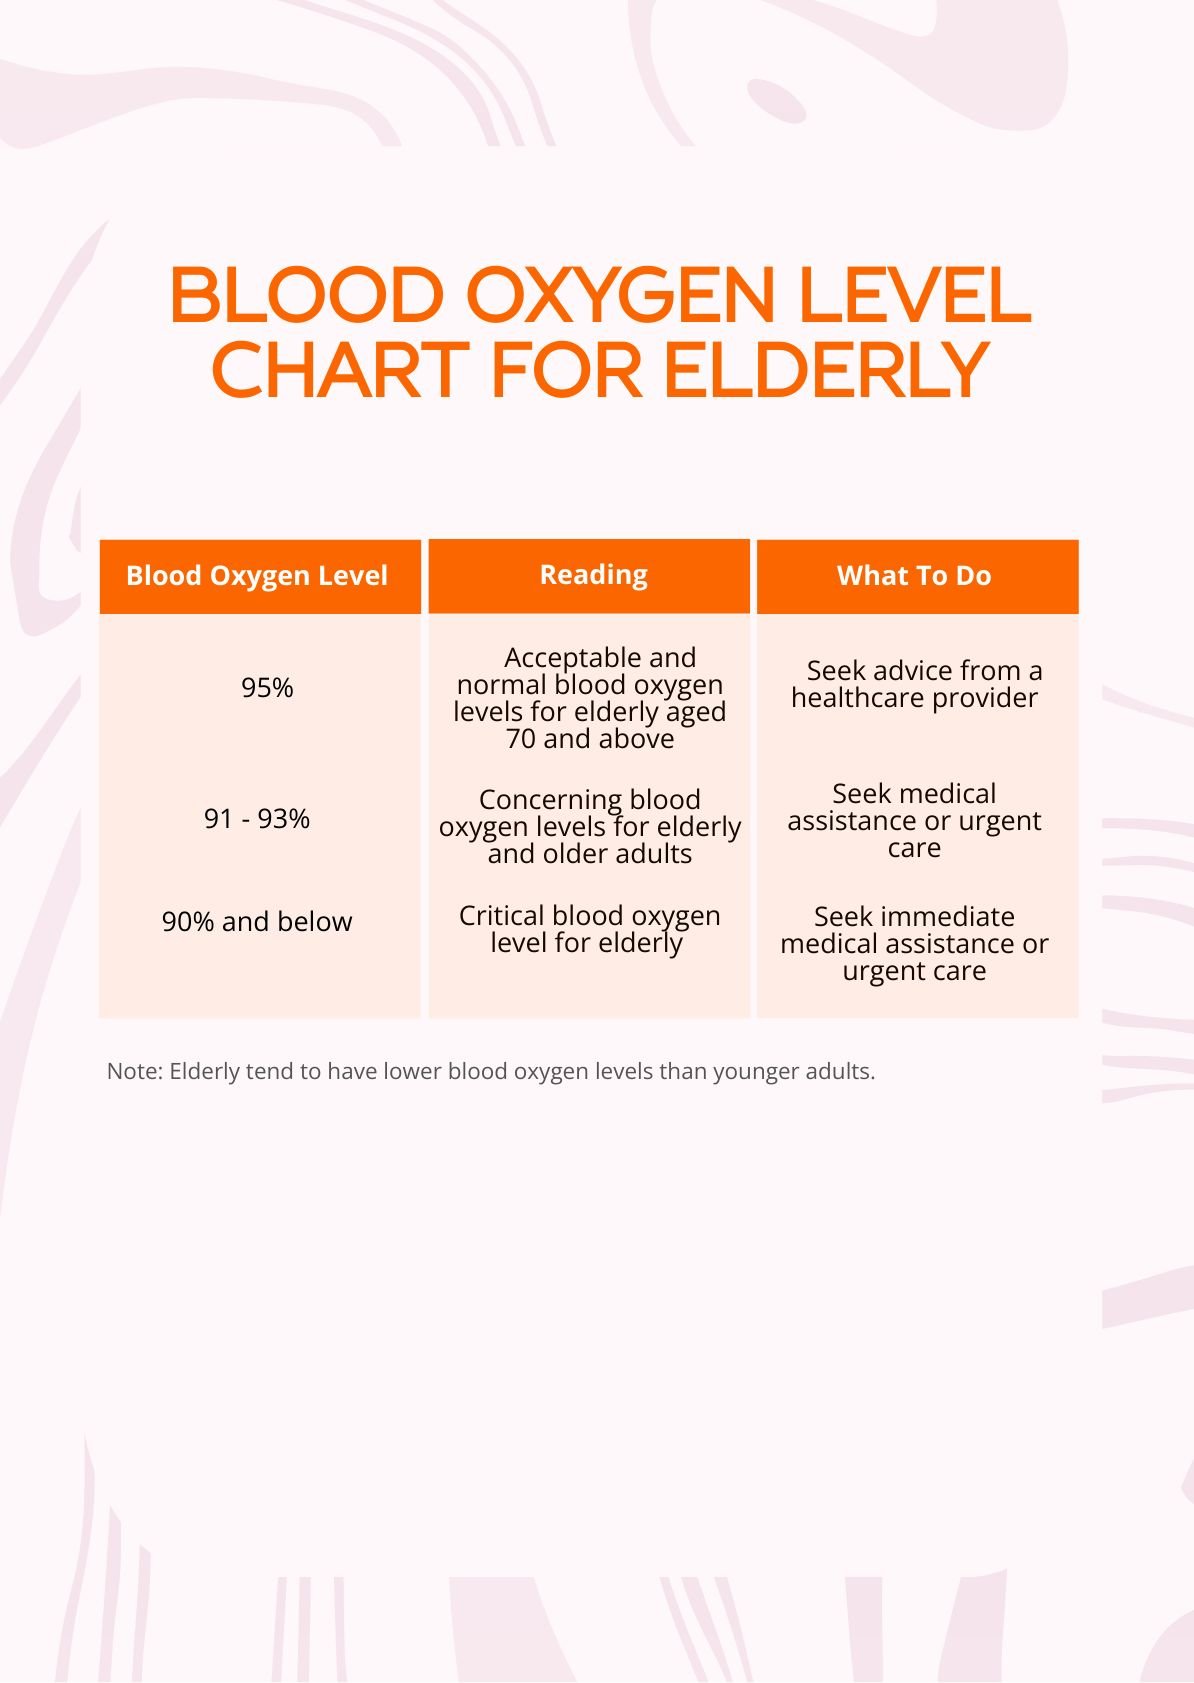 Free Good Blood Oxygen Level Chart - Download in PDF, Illustrator